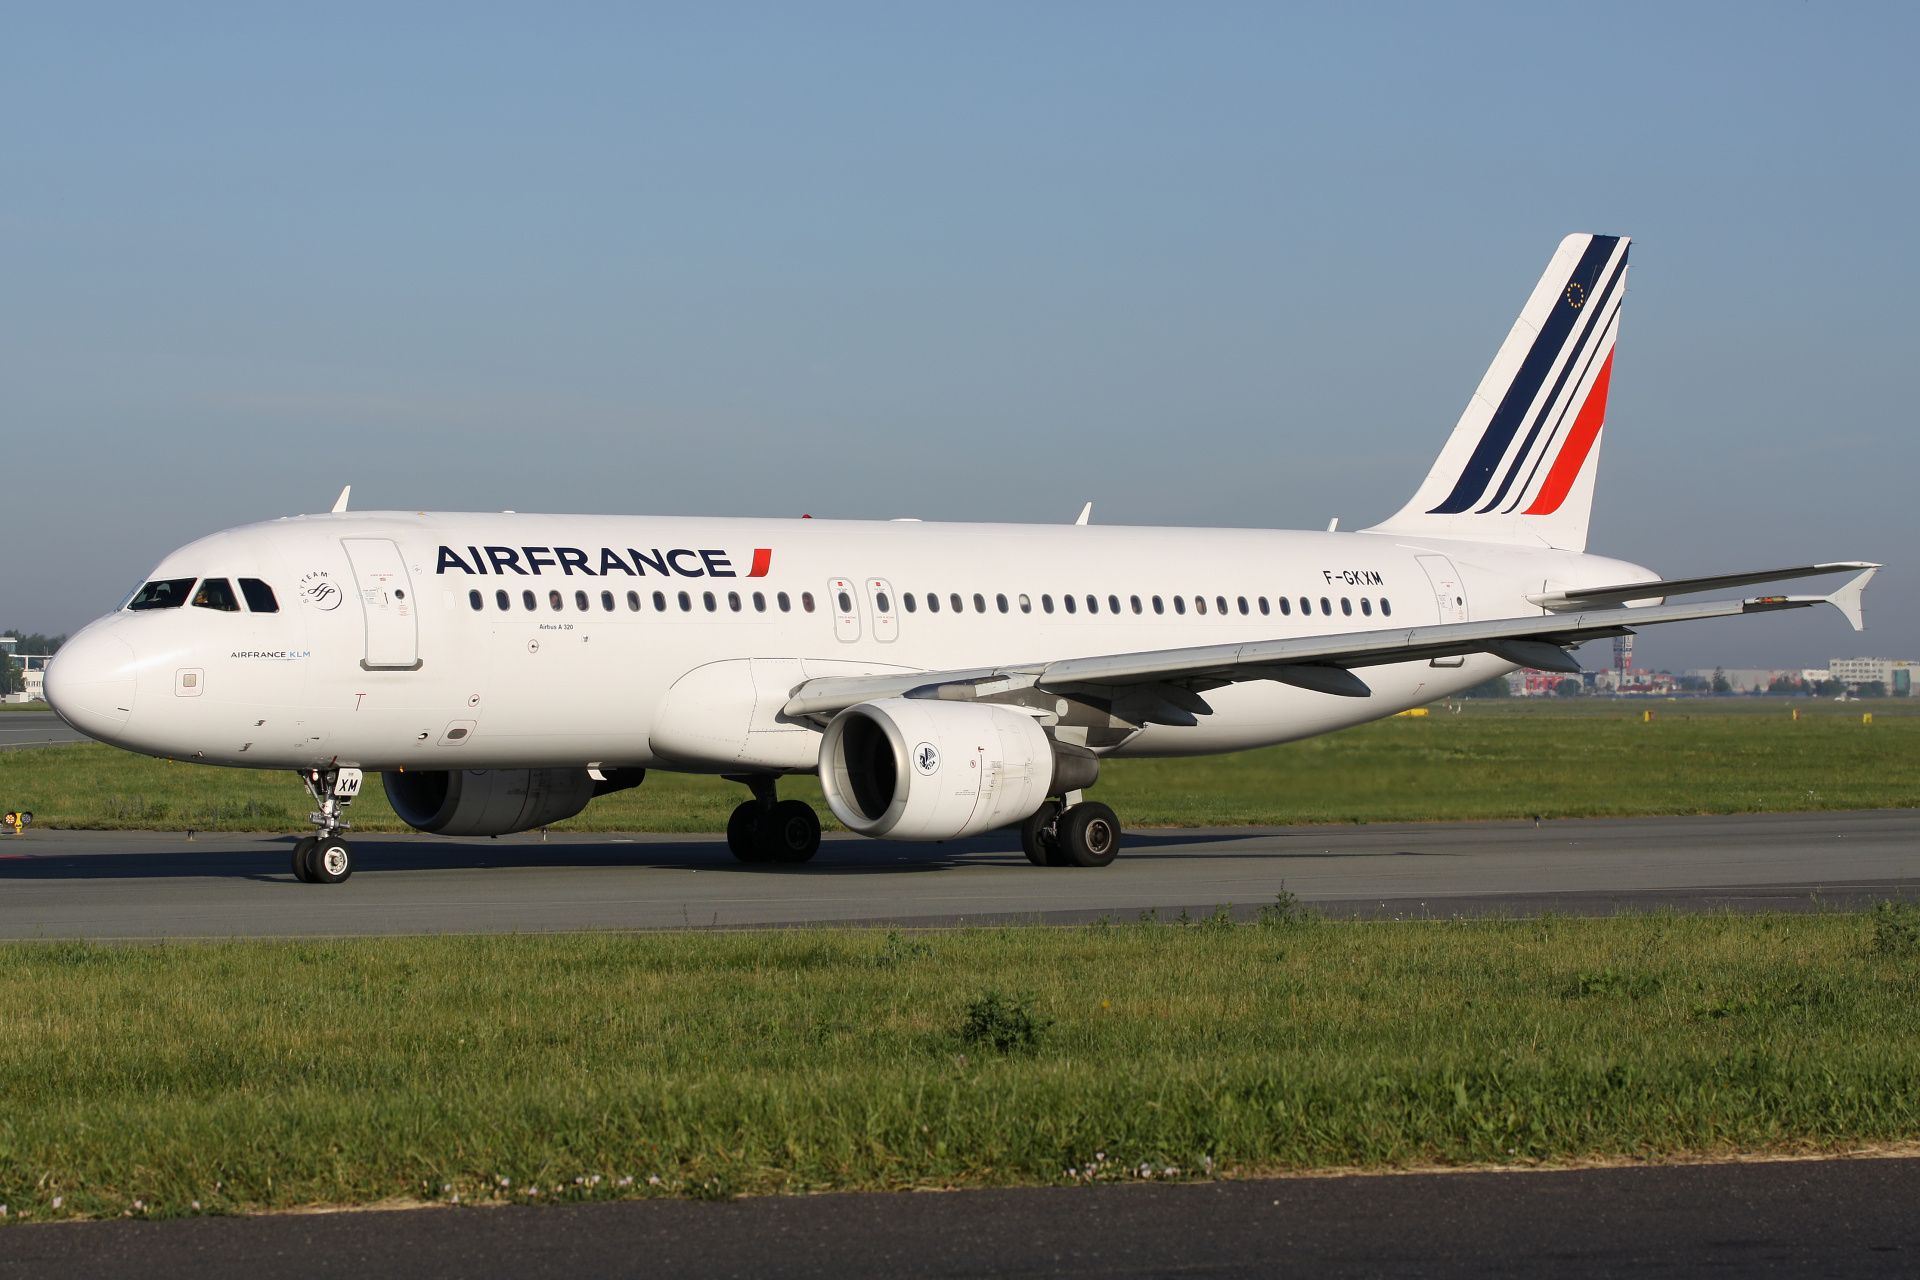 F-GKXM (Aircraft » EPWA Spotting » Airbus A320-200 » Air France)